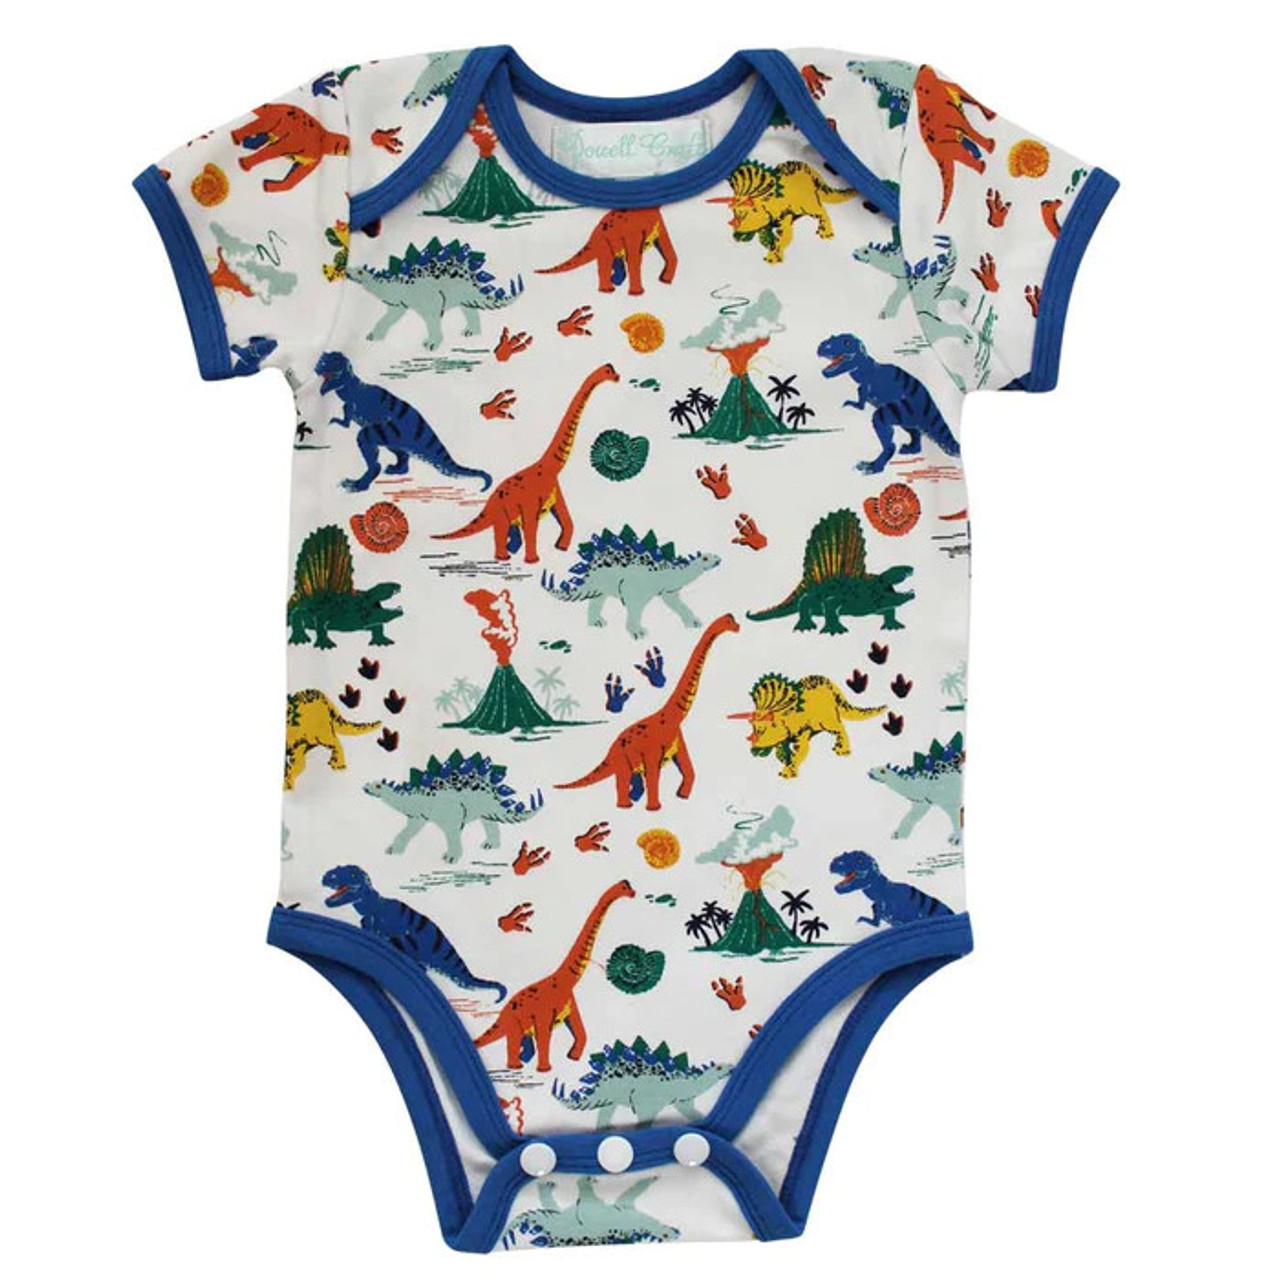 Dinosaur Print Baby Grow 6-12M *in-store